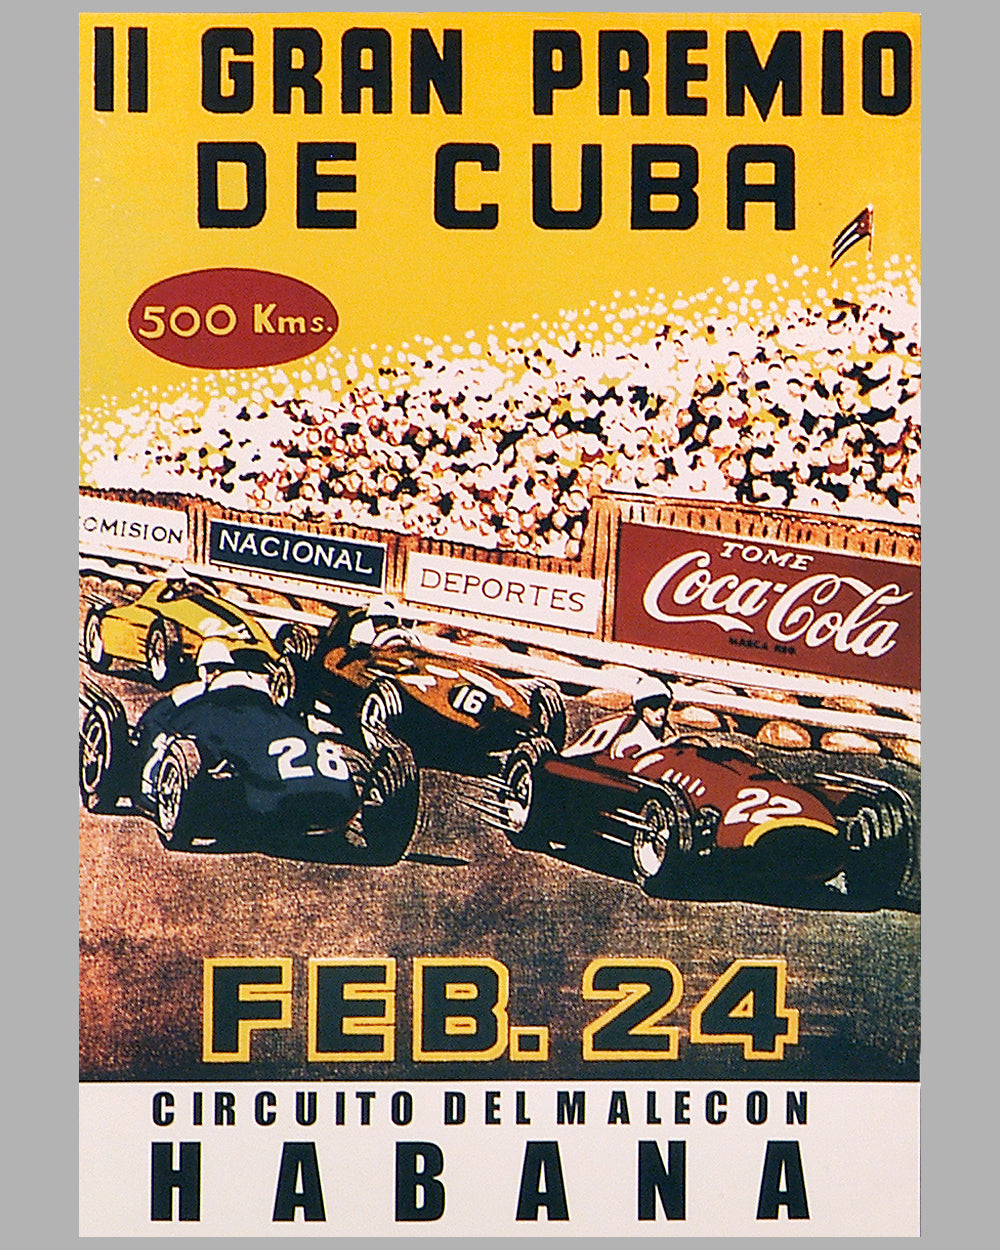 1957 Grand Prix of Cuba event poster (Reproduction)